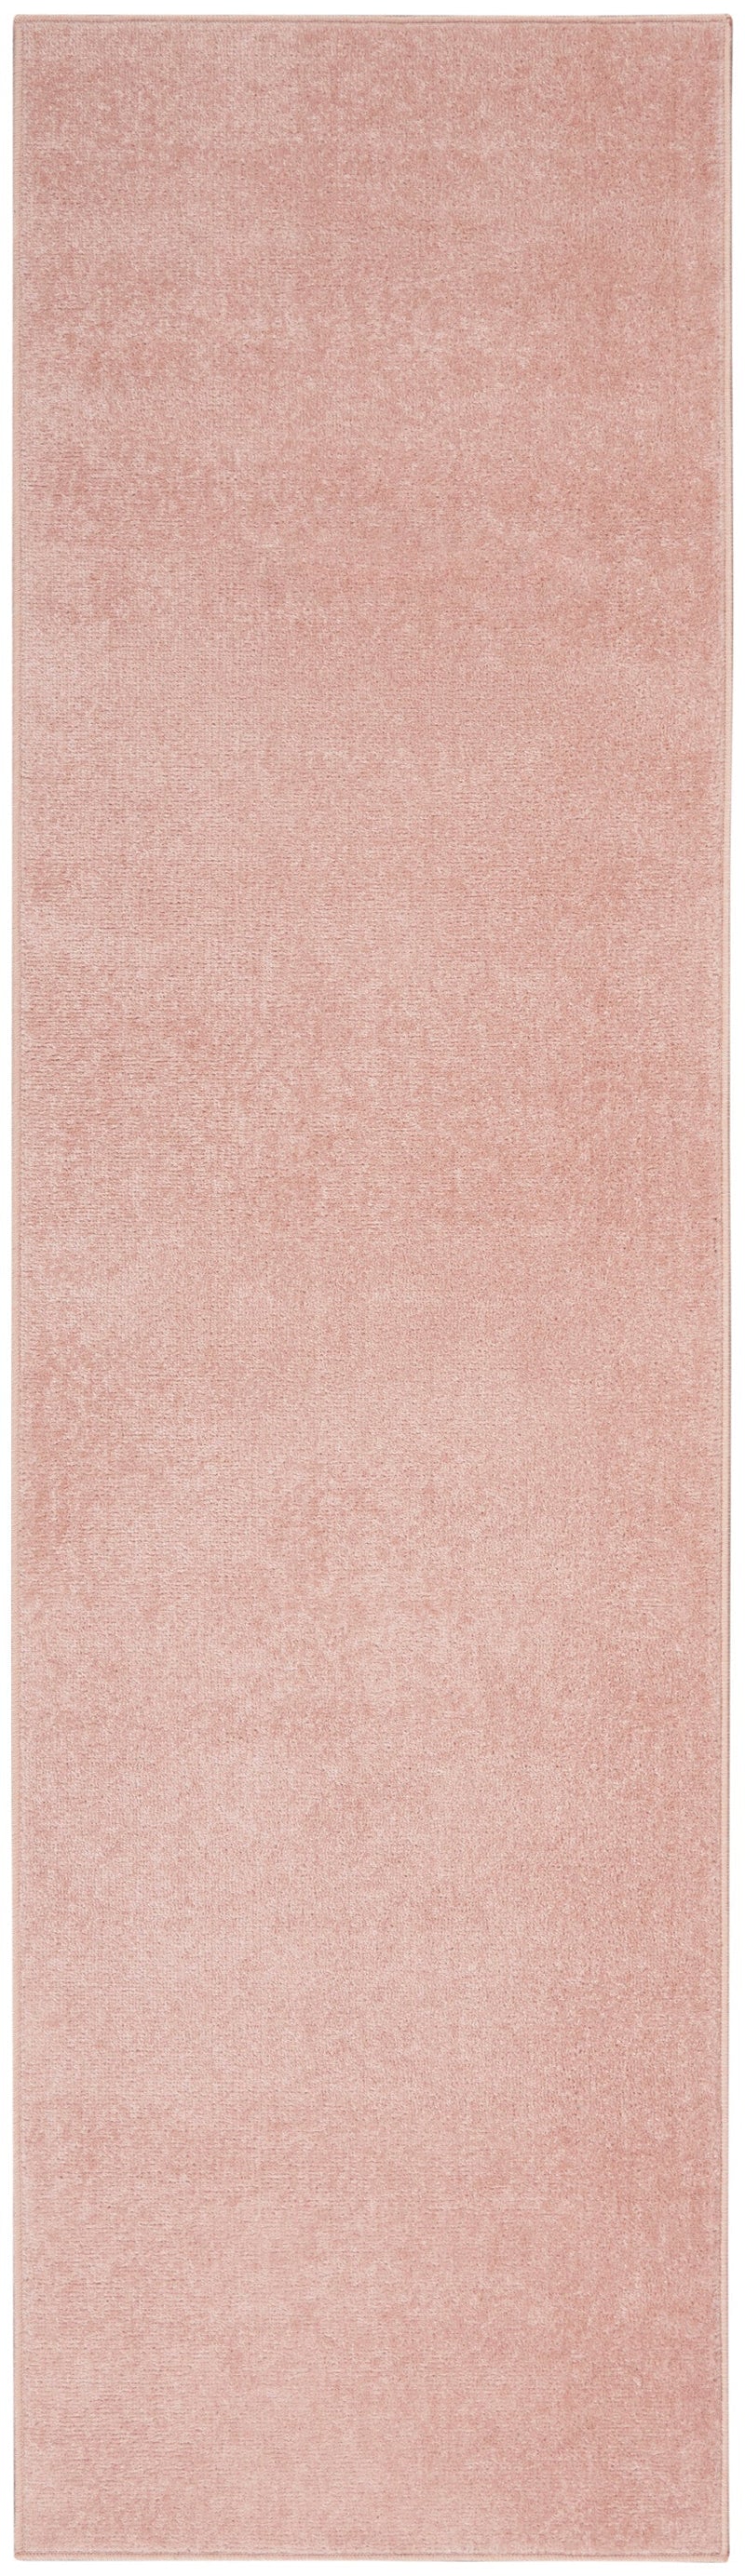 media image for nourison essentials pink rug by nourison 99446824776 redo 4 221